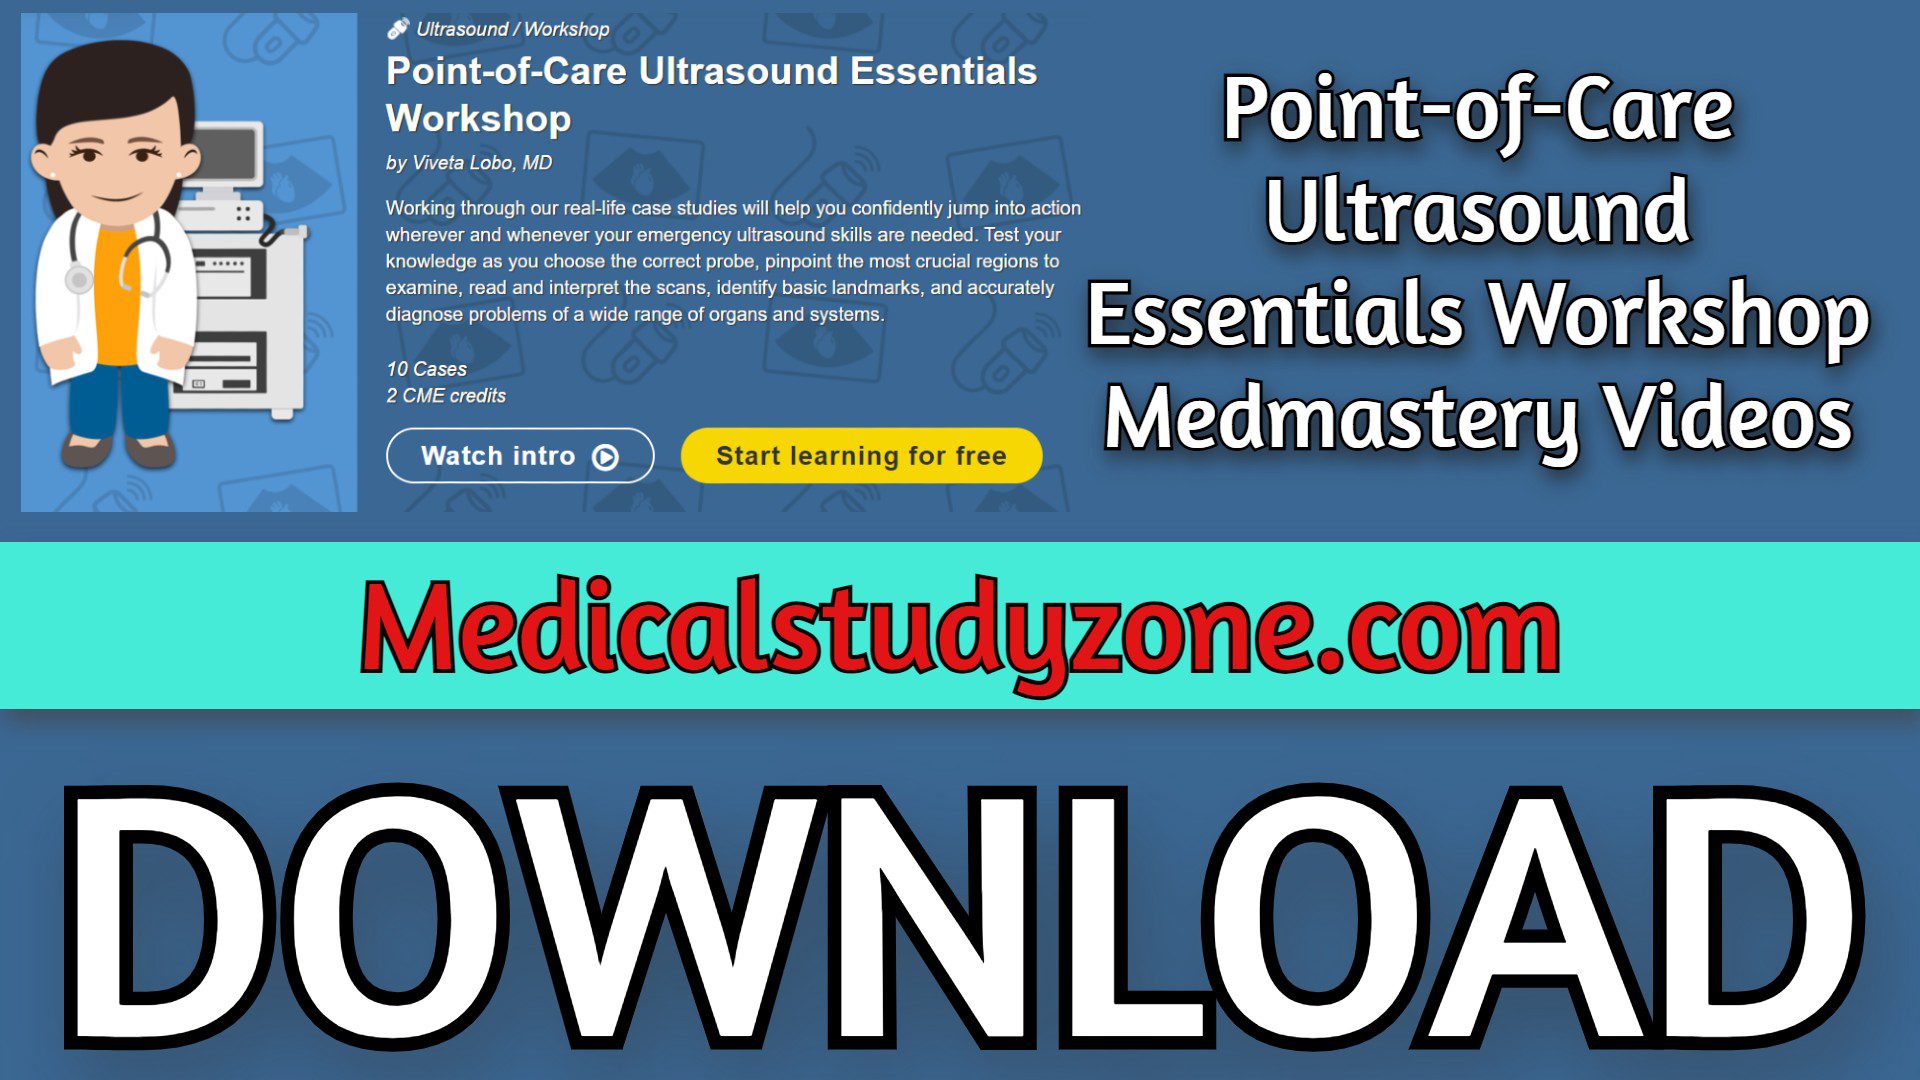 Point-of-Care Ultrasound Essentials Workshop | Medmastery 2023 Videos Free Download